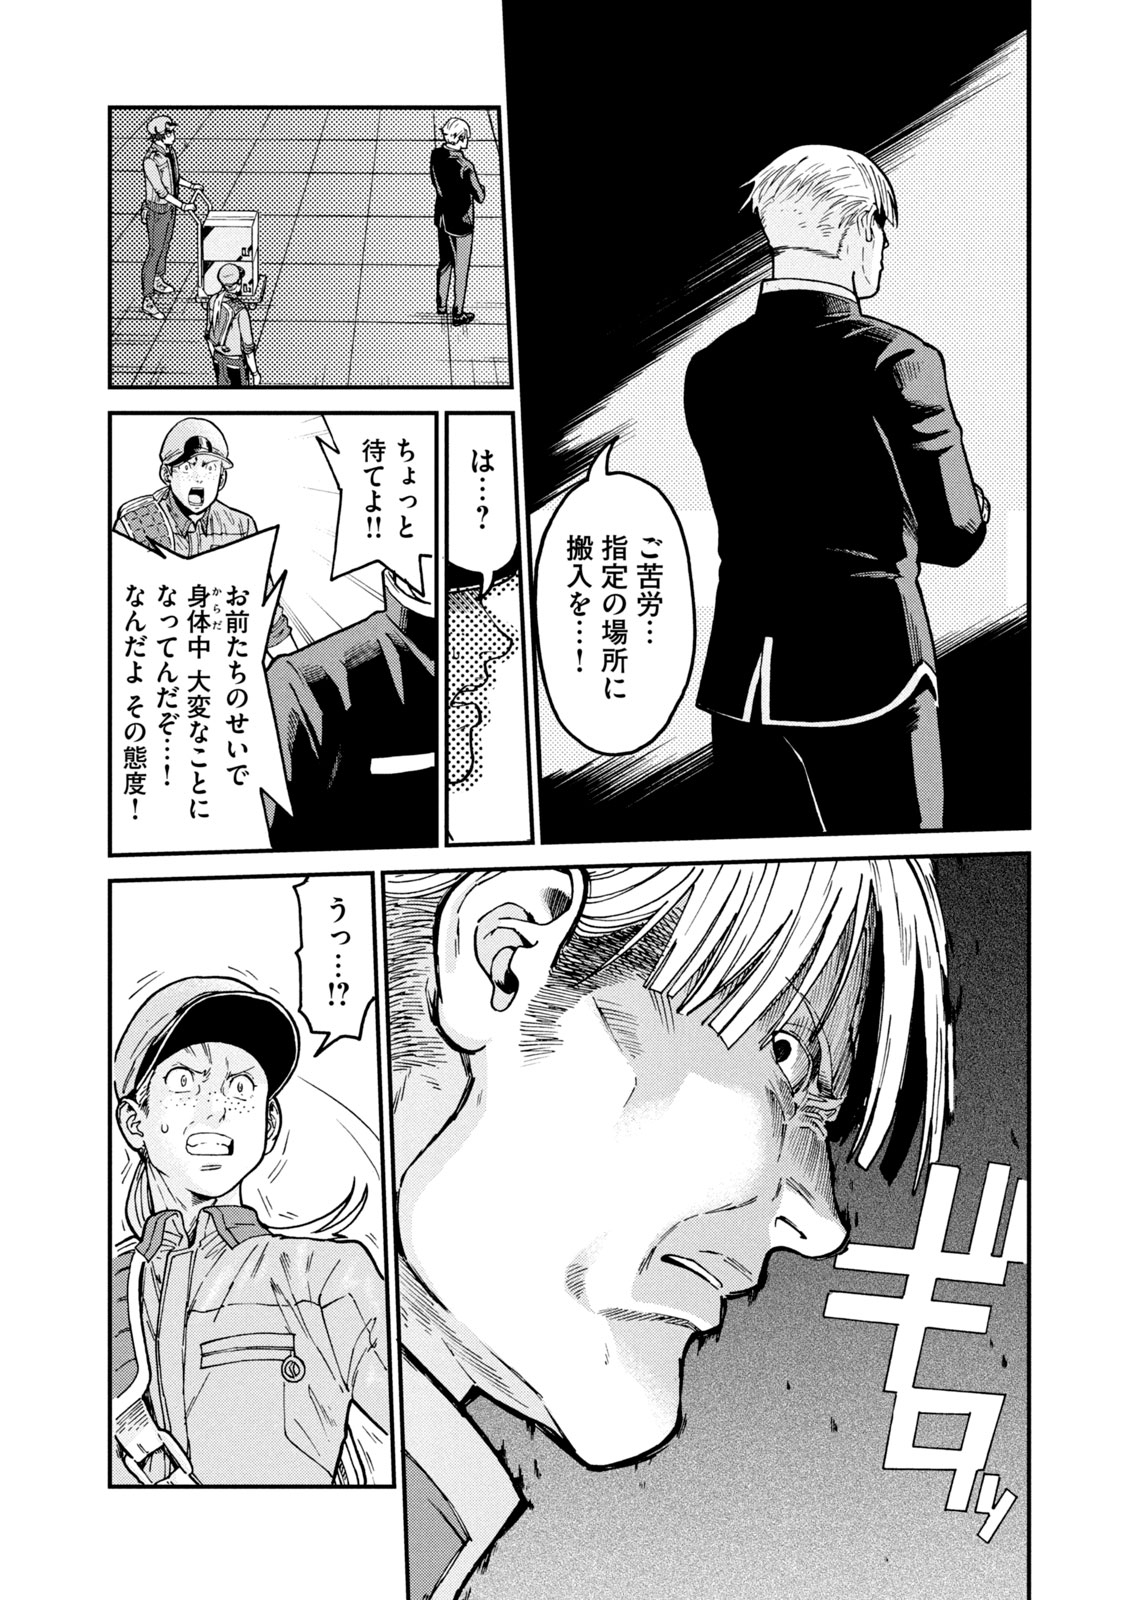 Hataraku Saibou BLACK - Chapter 34 - Page 14